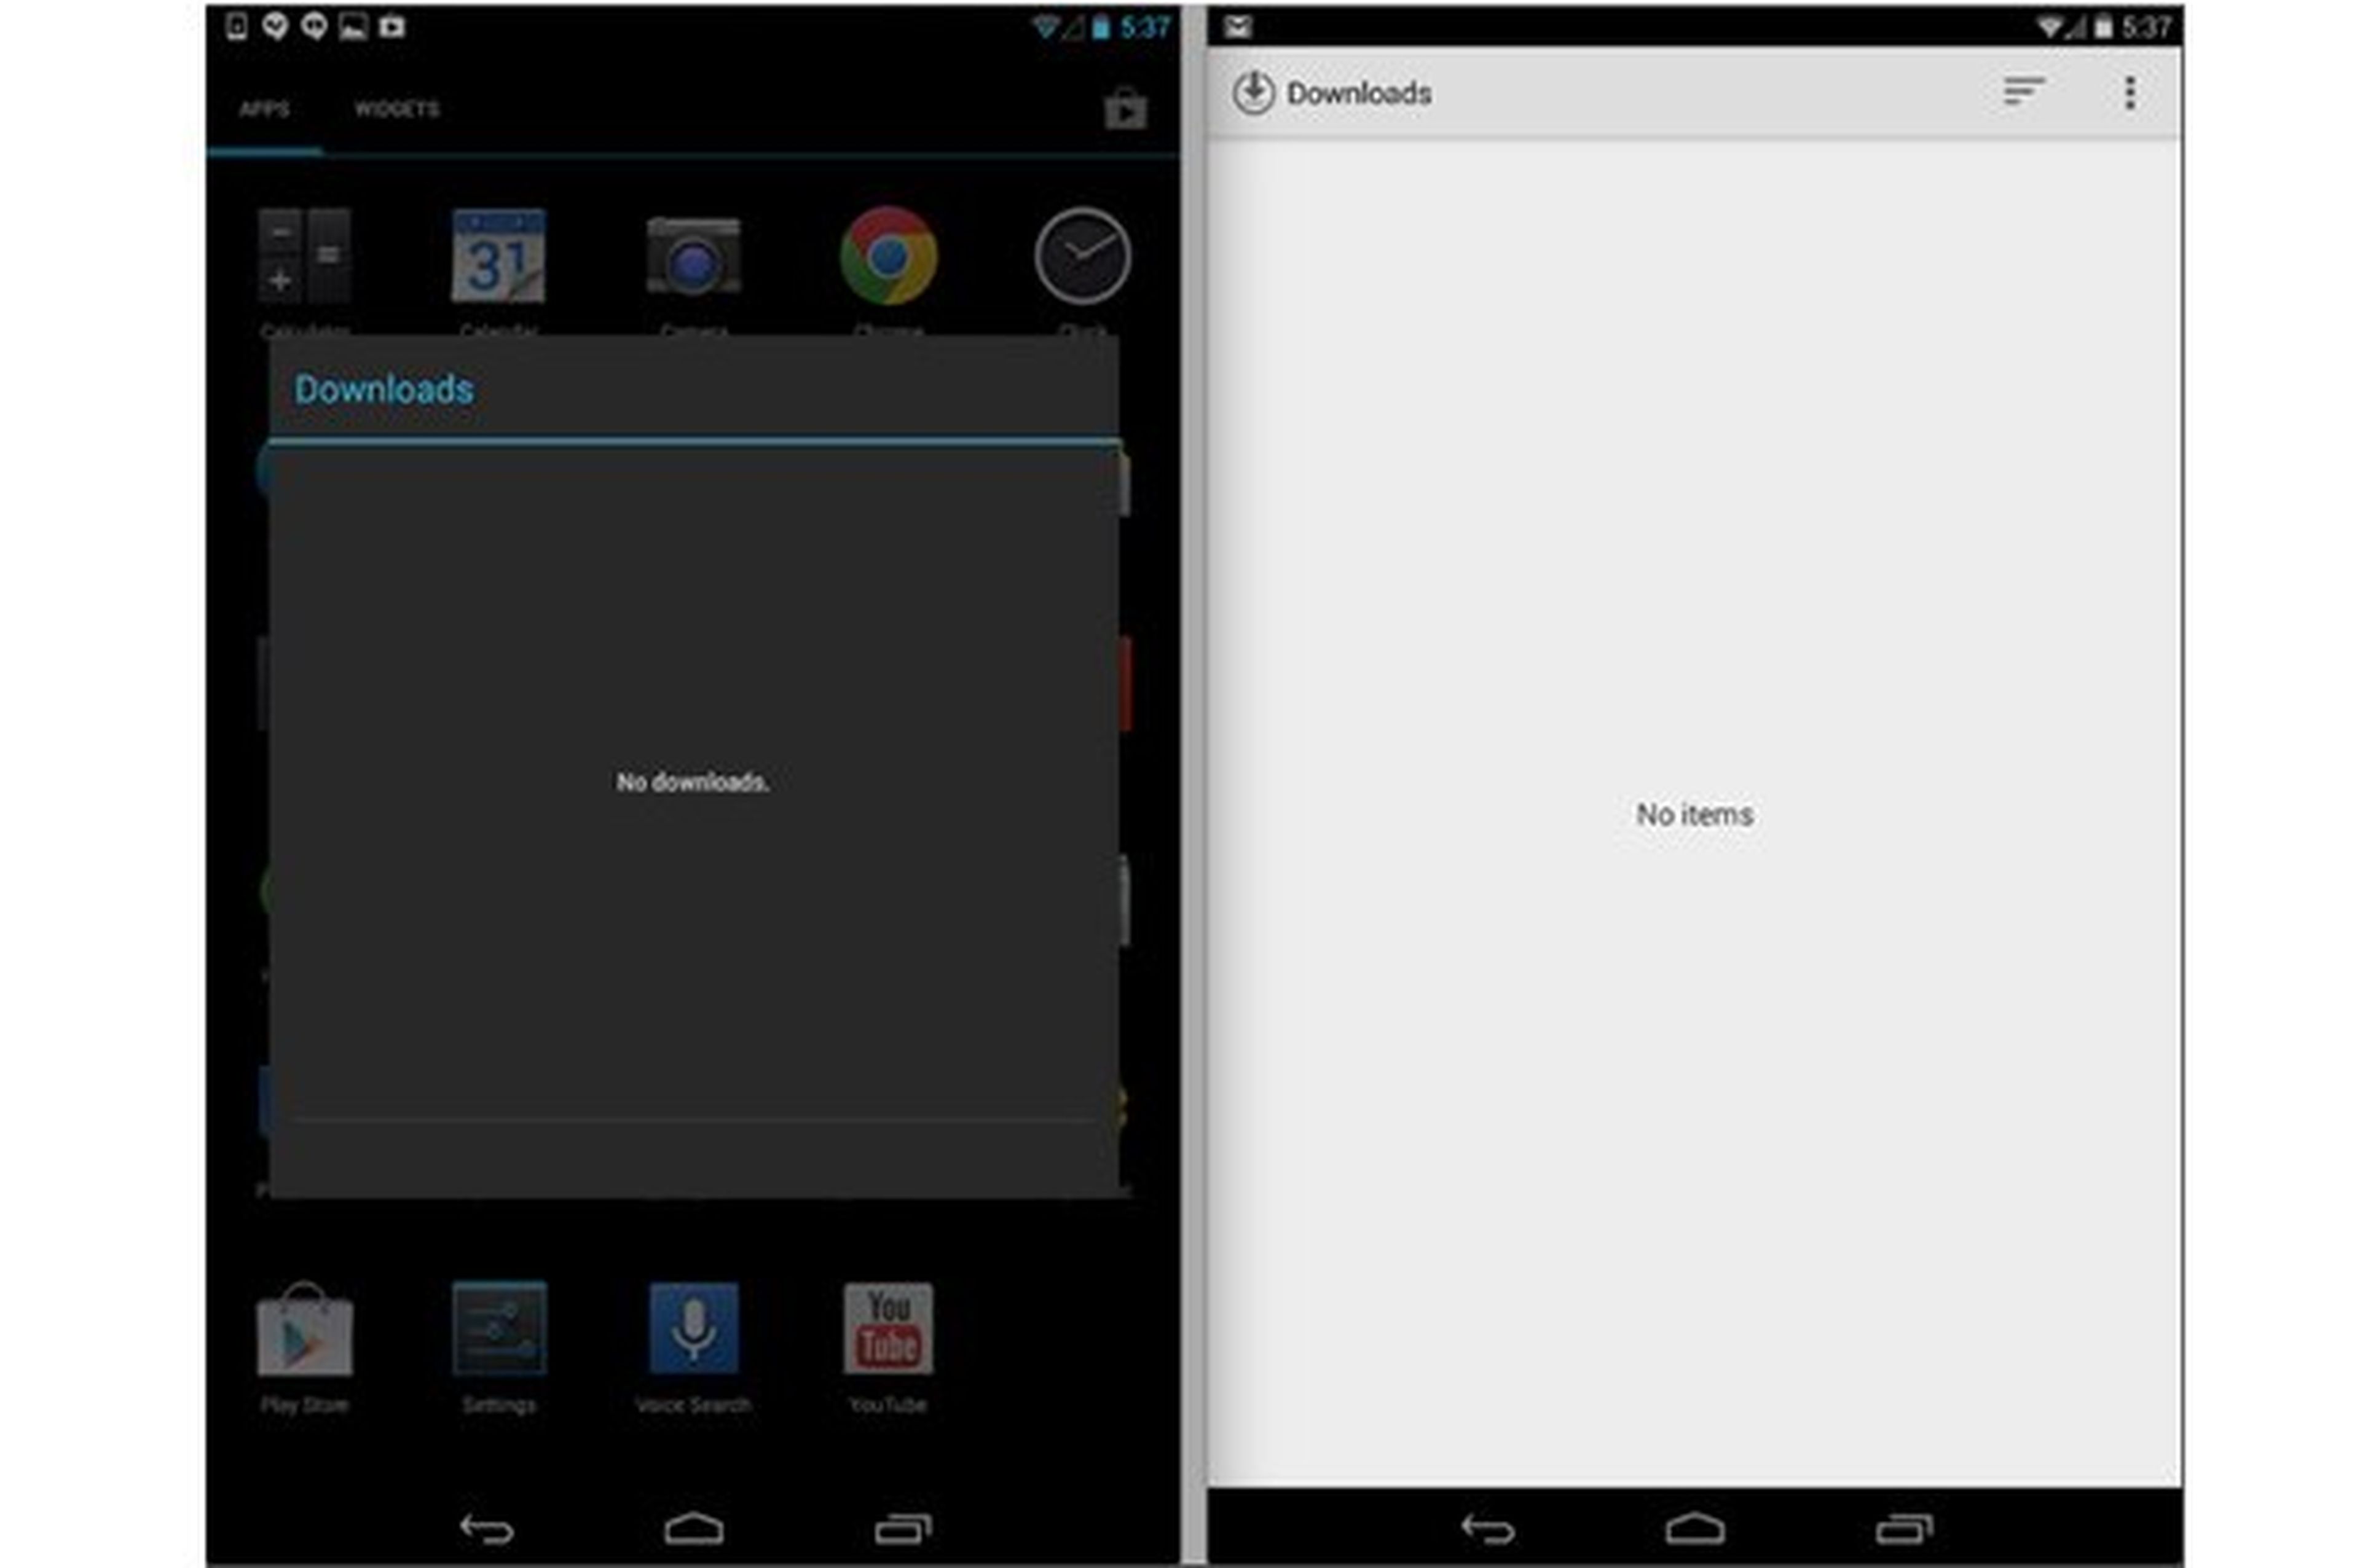 Android kitkat 4.4 dowload